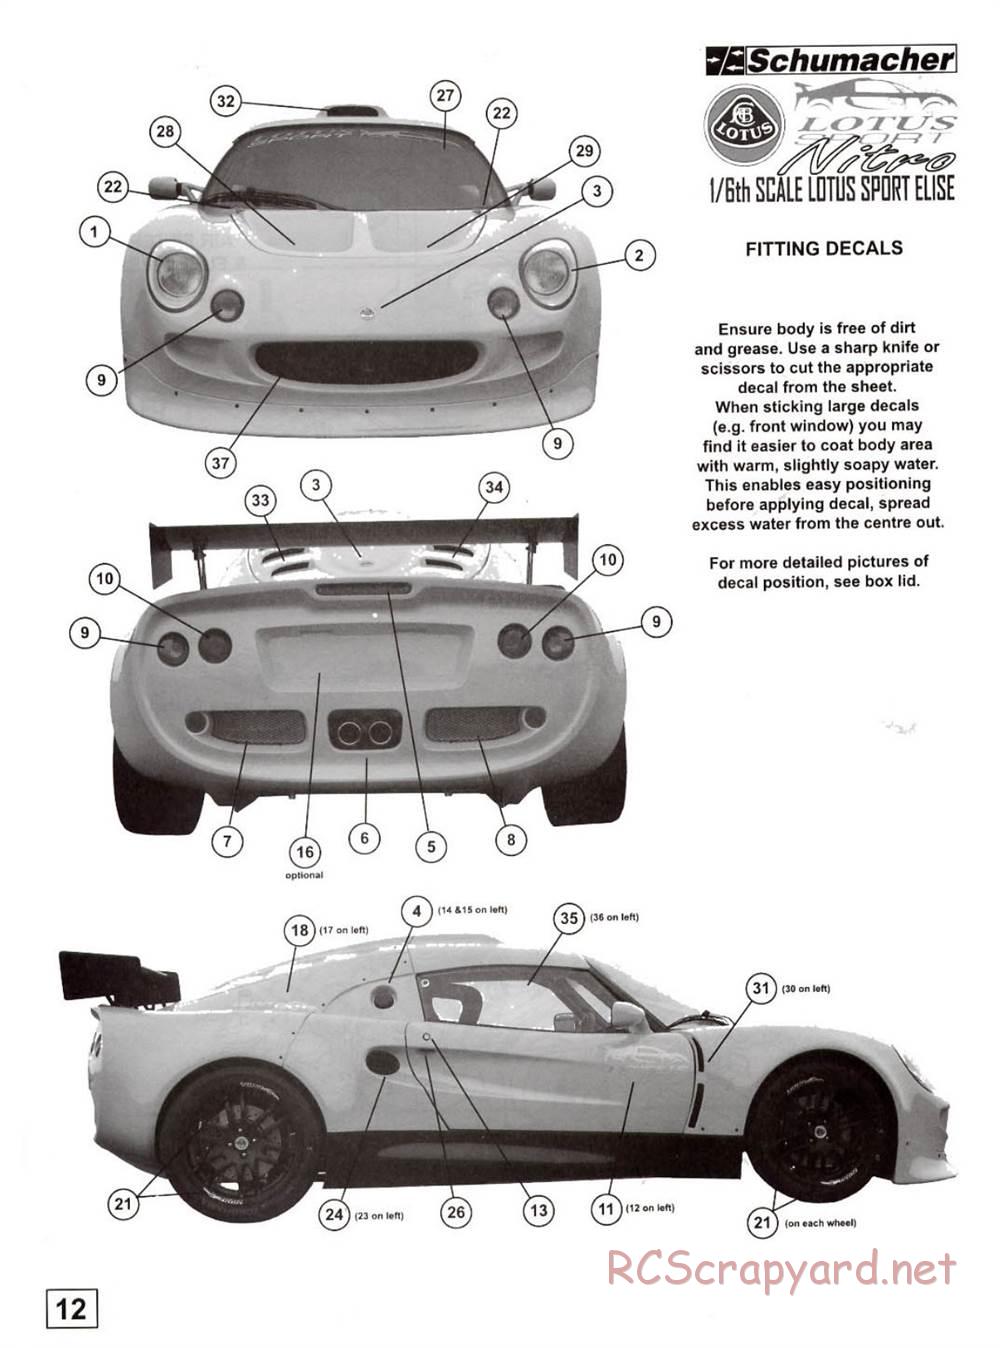 Schumacher - Big 6 Lotus Nitro - Manual - Page 6